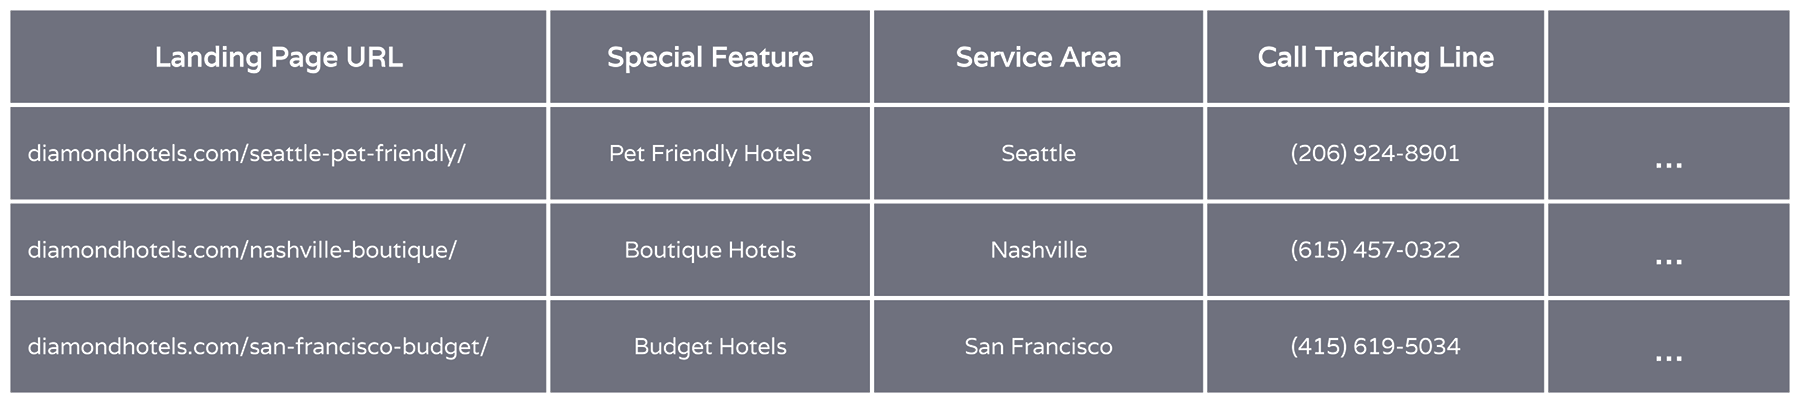 Hotel Landing Page Database